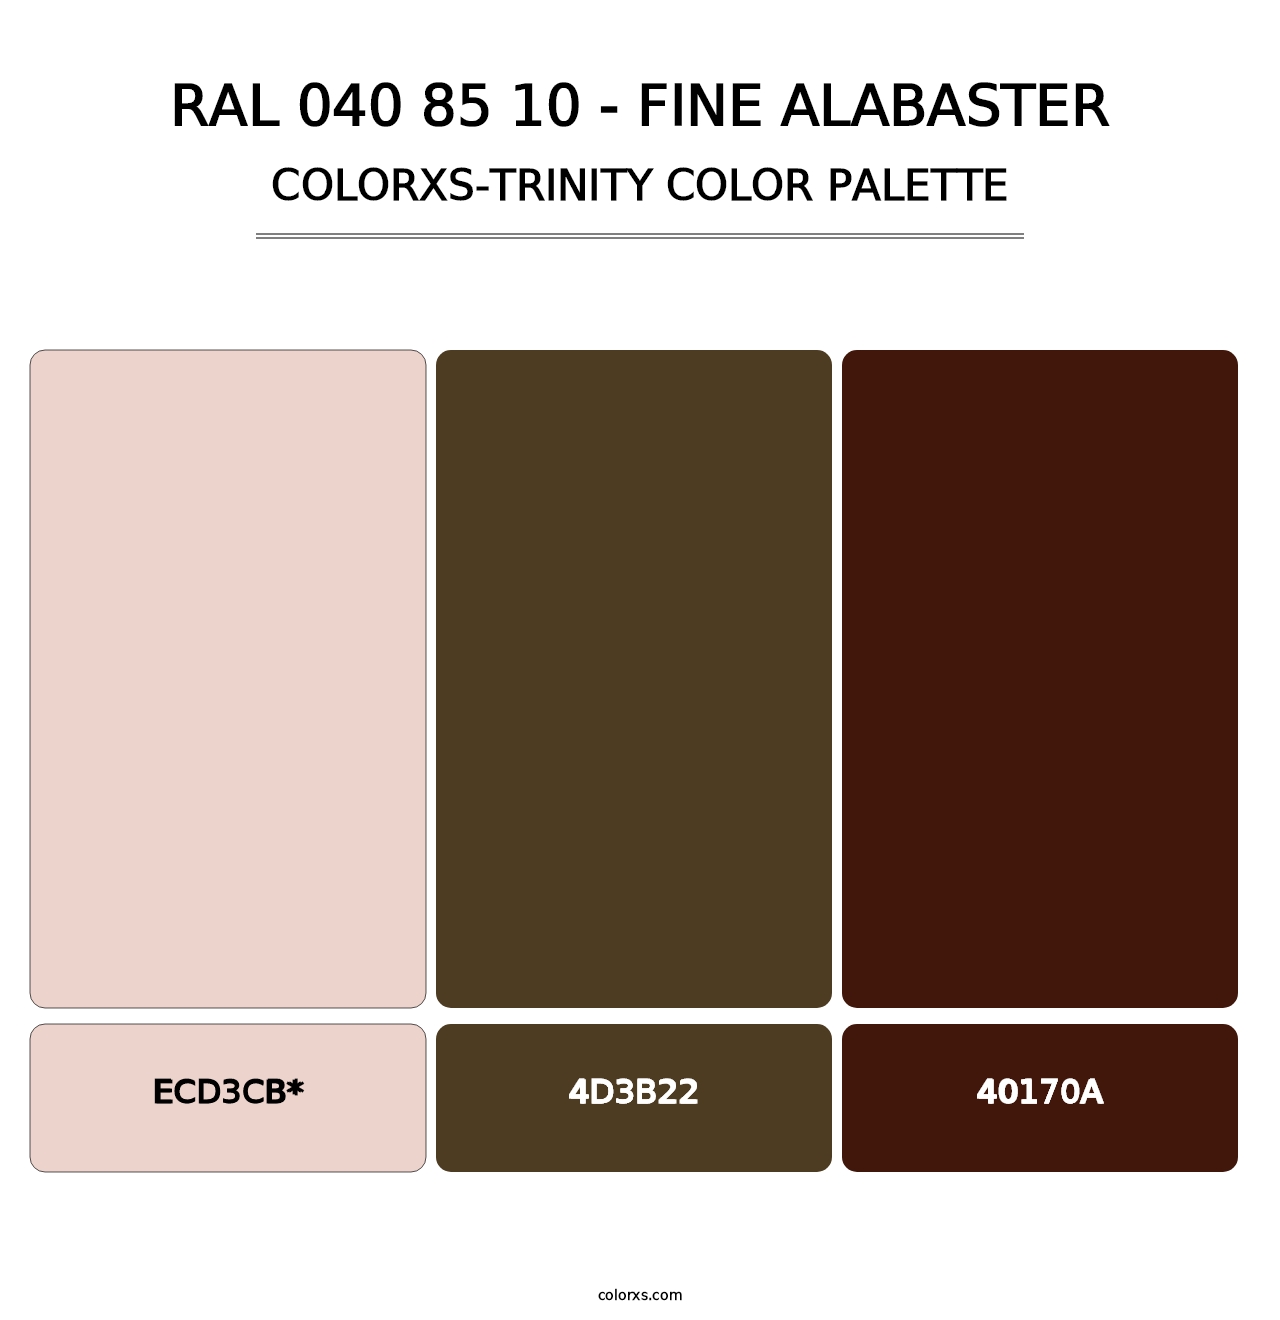 RAL 040 85 10 - Fine Alabaster - Colorxs Trinity Palette